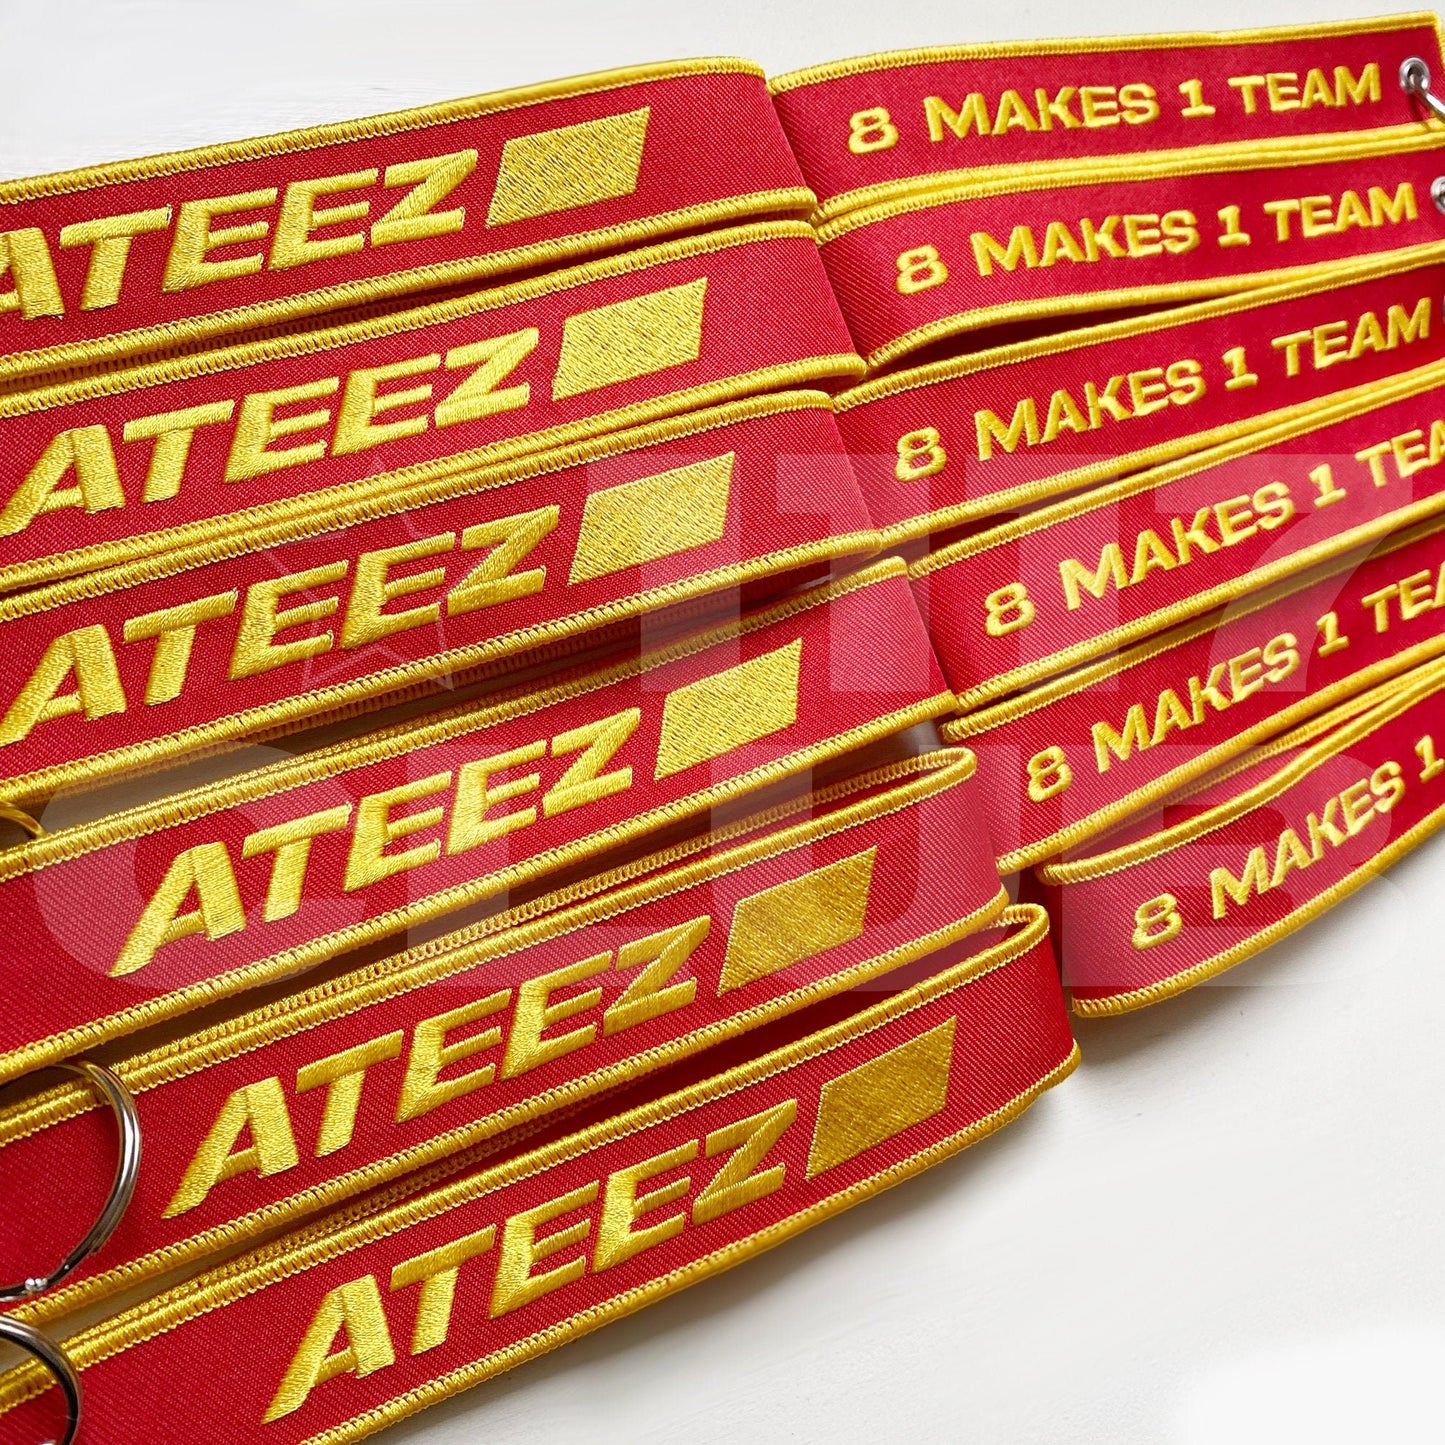 ATEEZ - "8 Makes 1 Team" Embroidered Keychain Wristlet